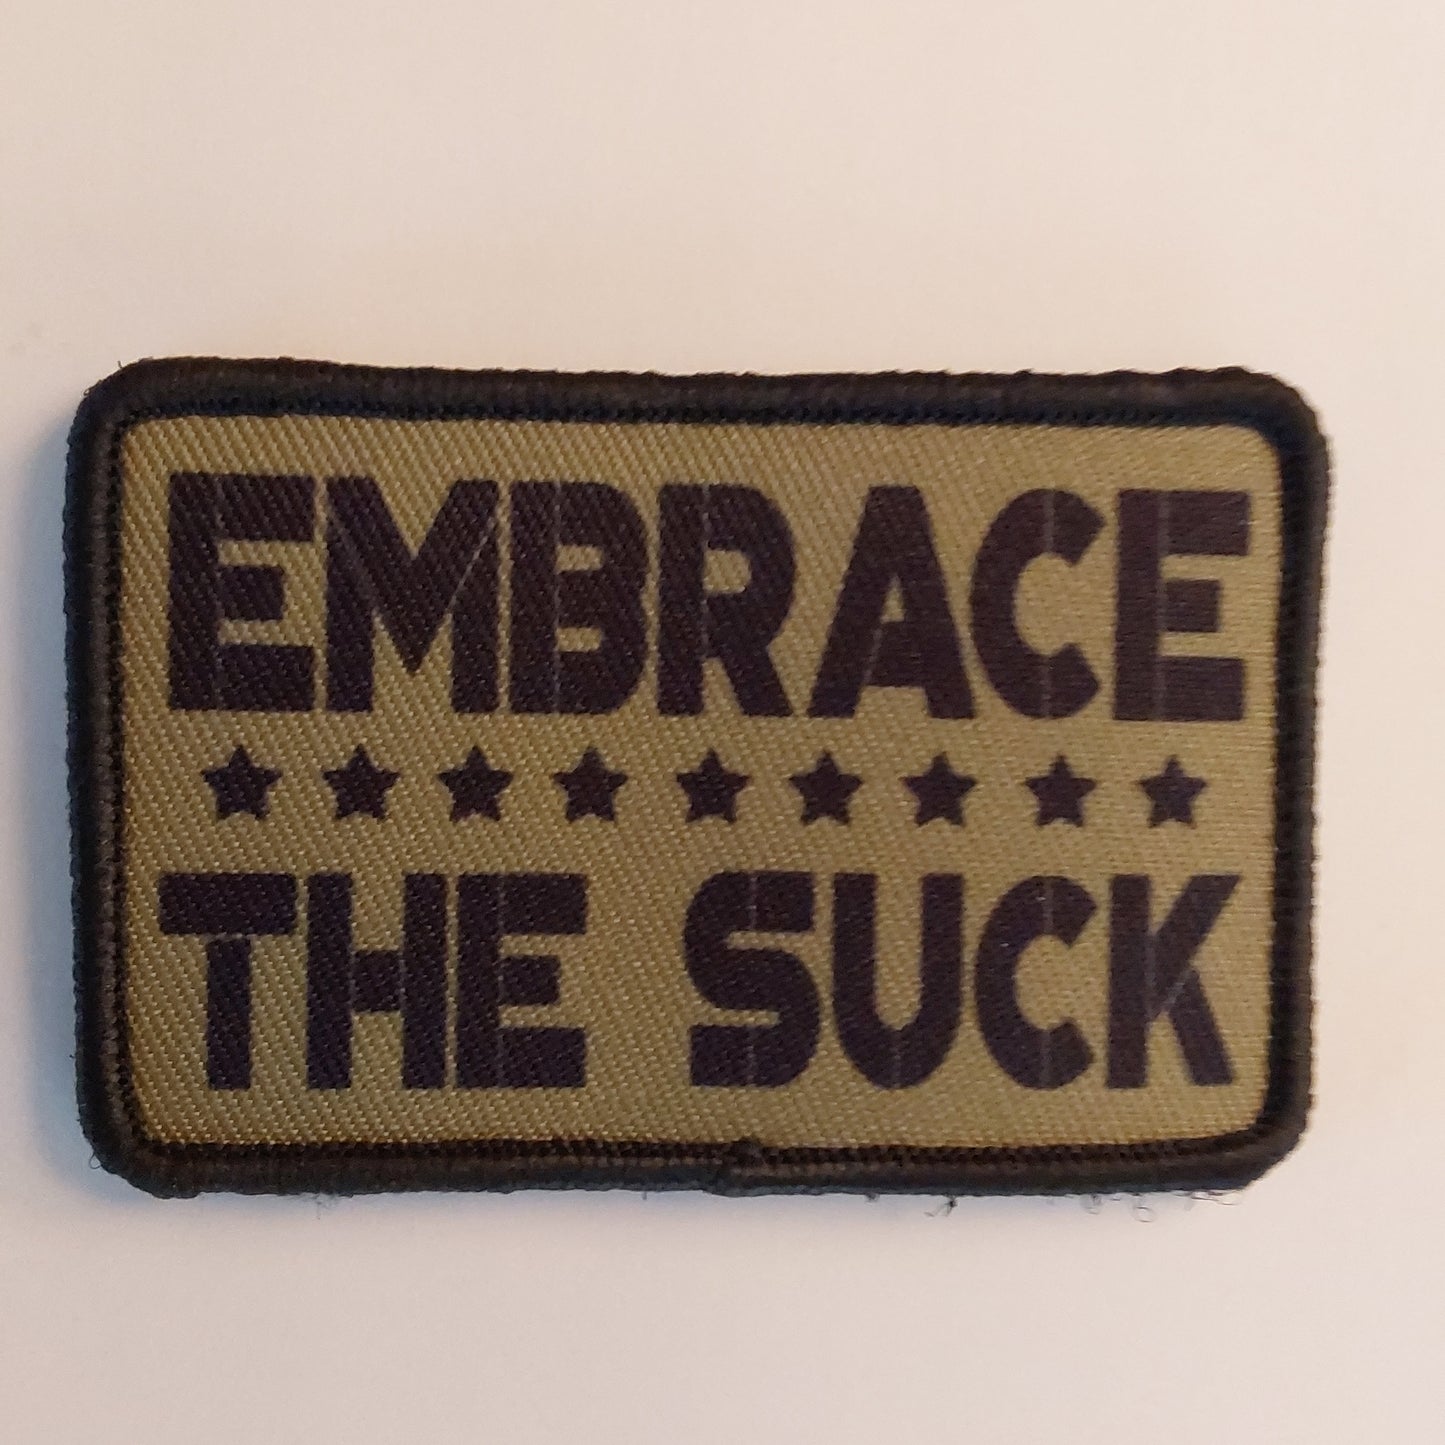 Embrace the Suck Morale Patch